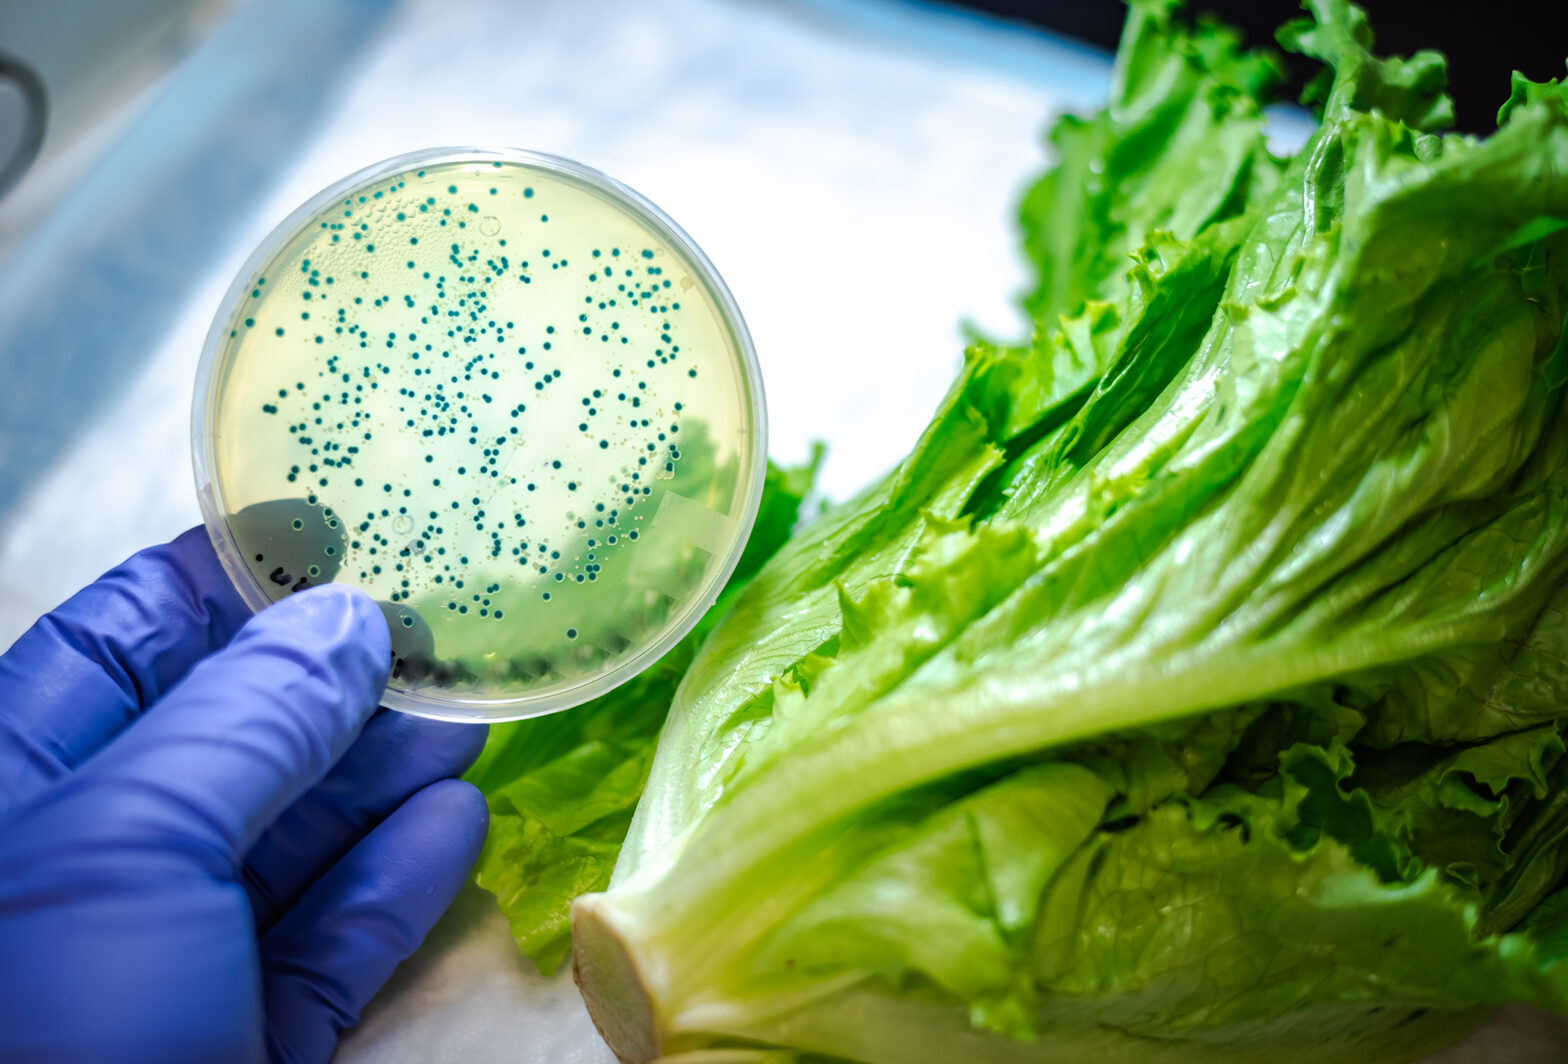 Bacterial culture plate against romaine lettuce